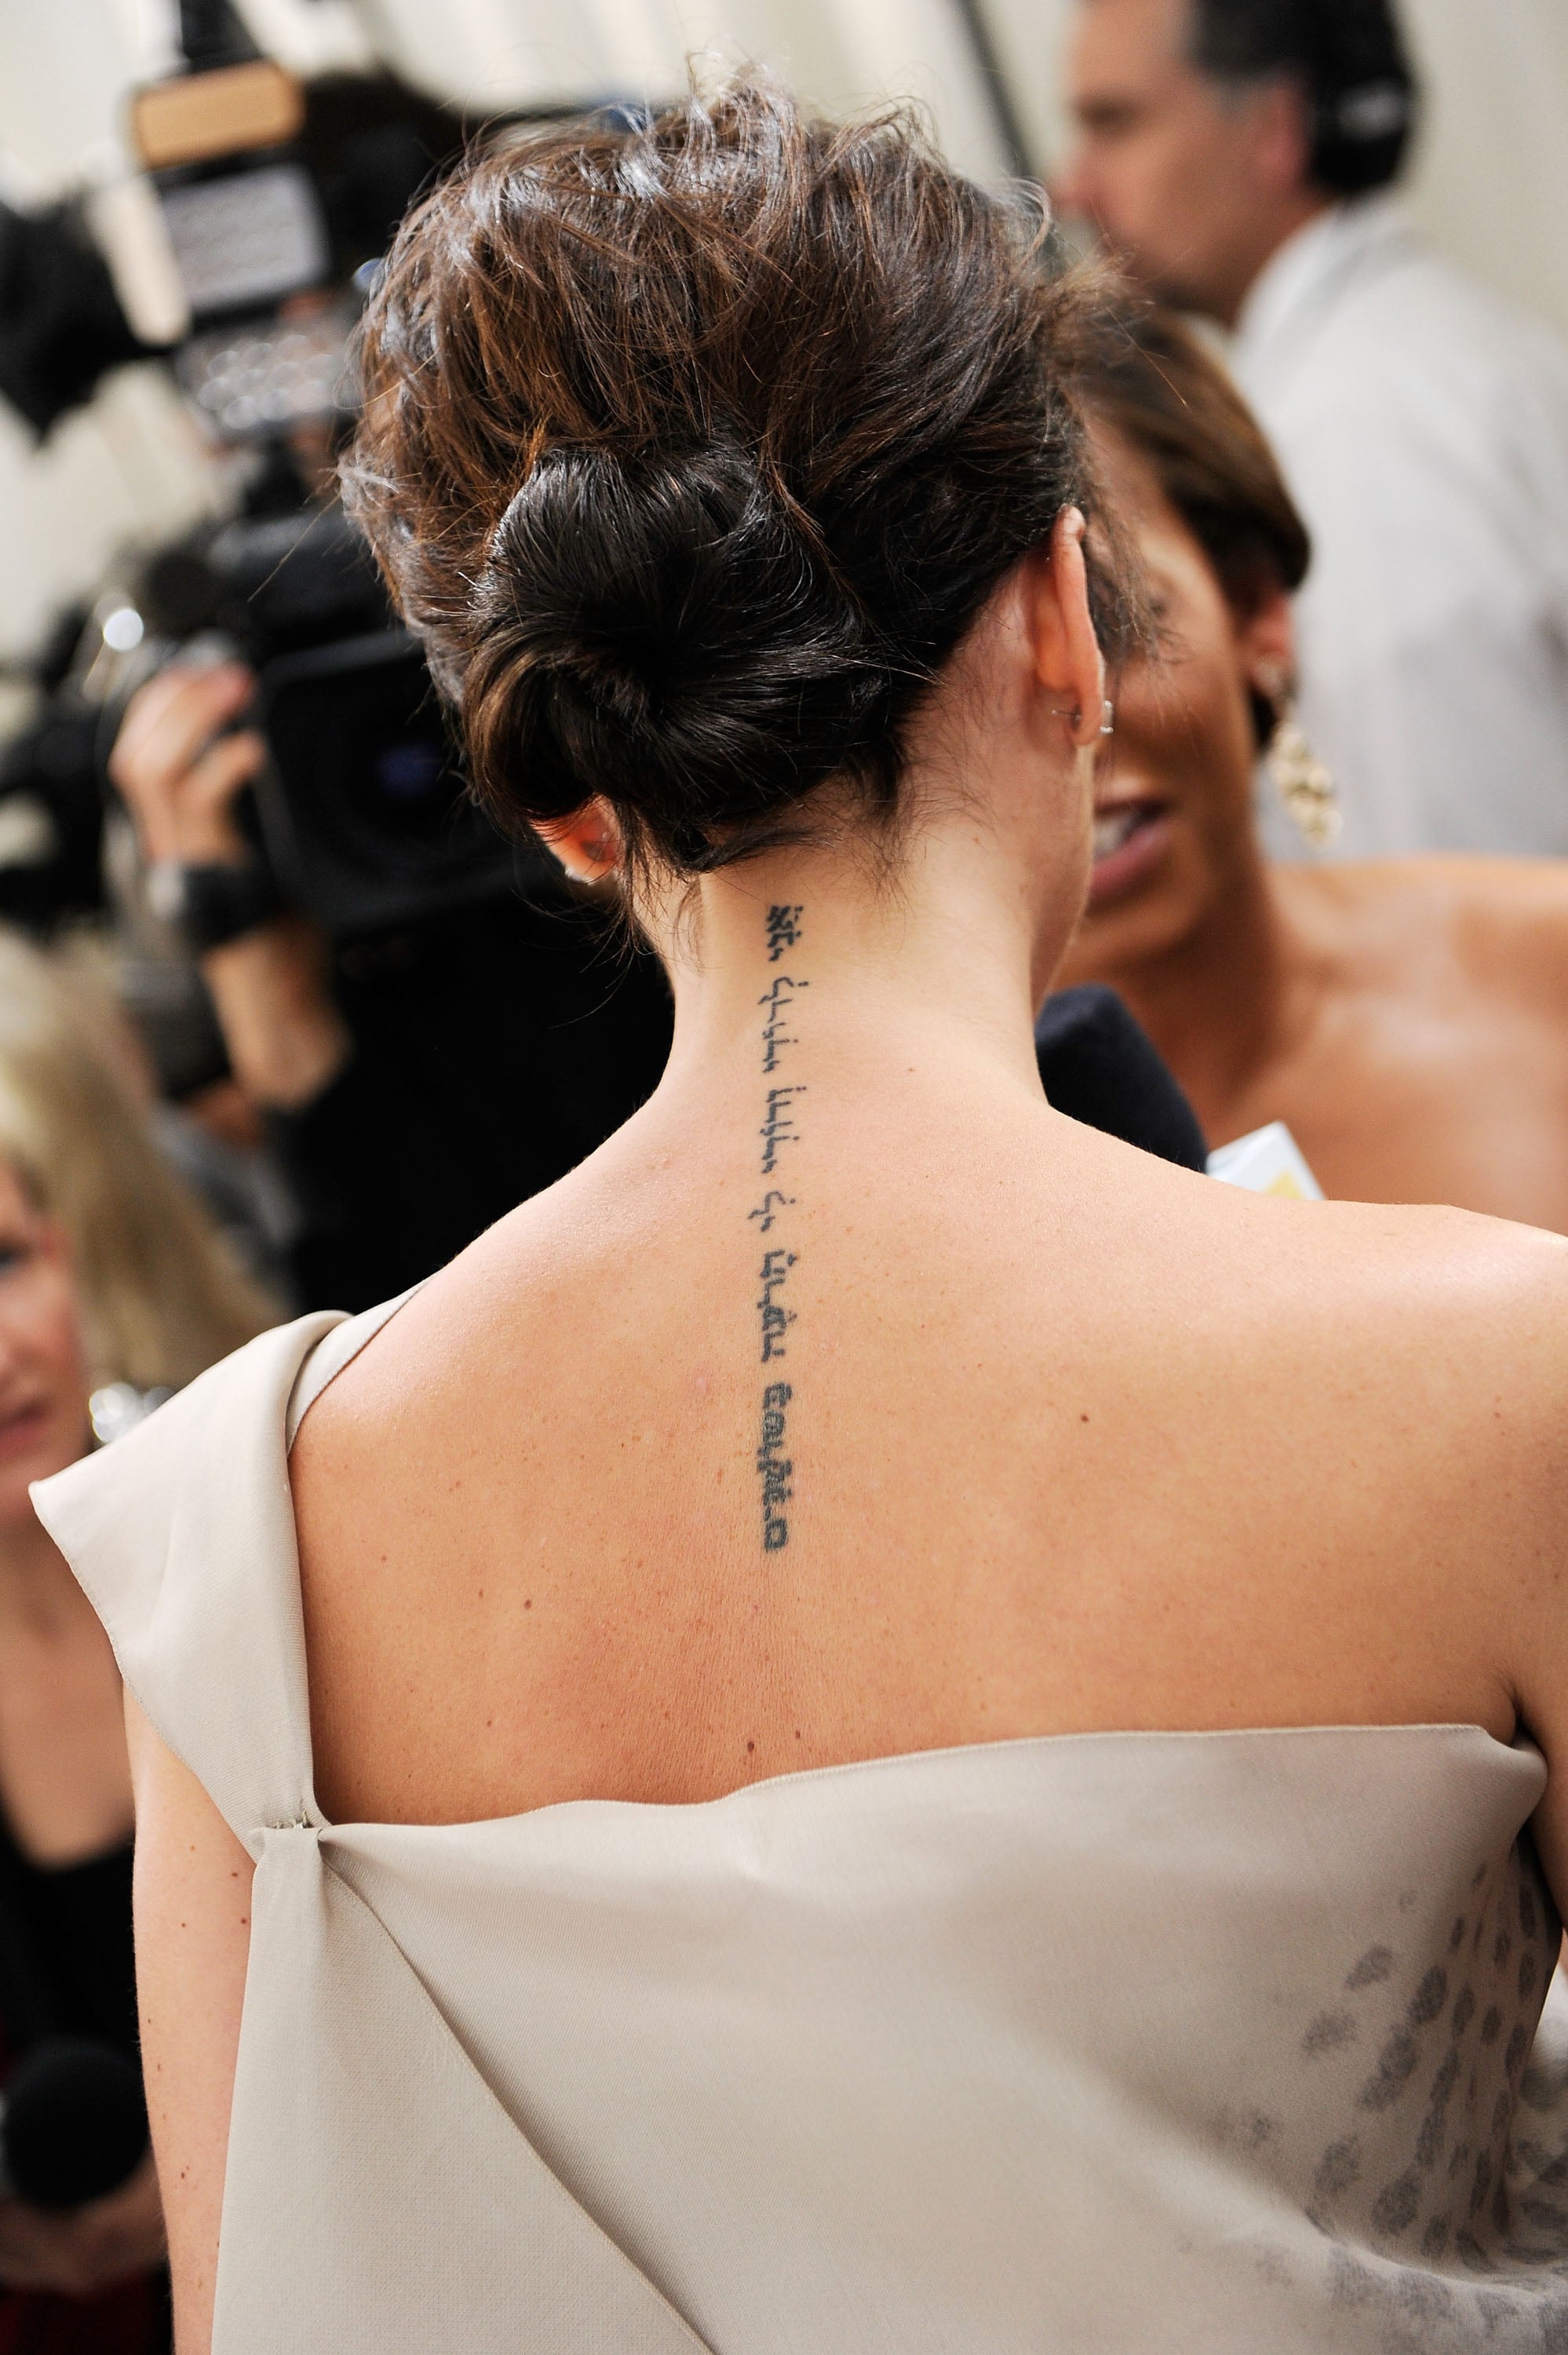 Victoria Beckhams neck tattoo fading away  Indiacom